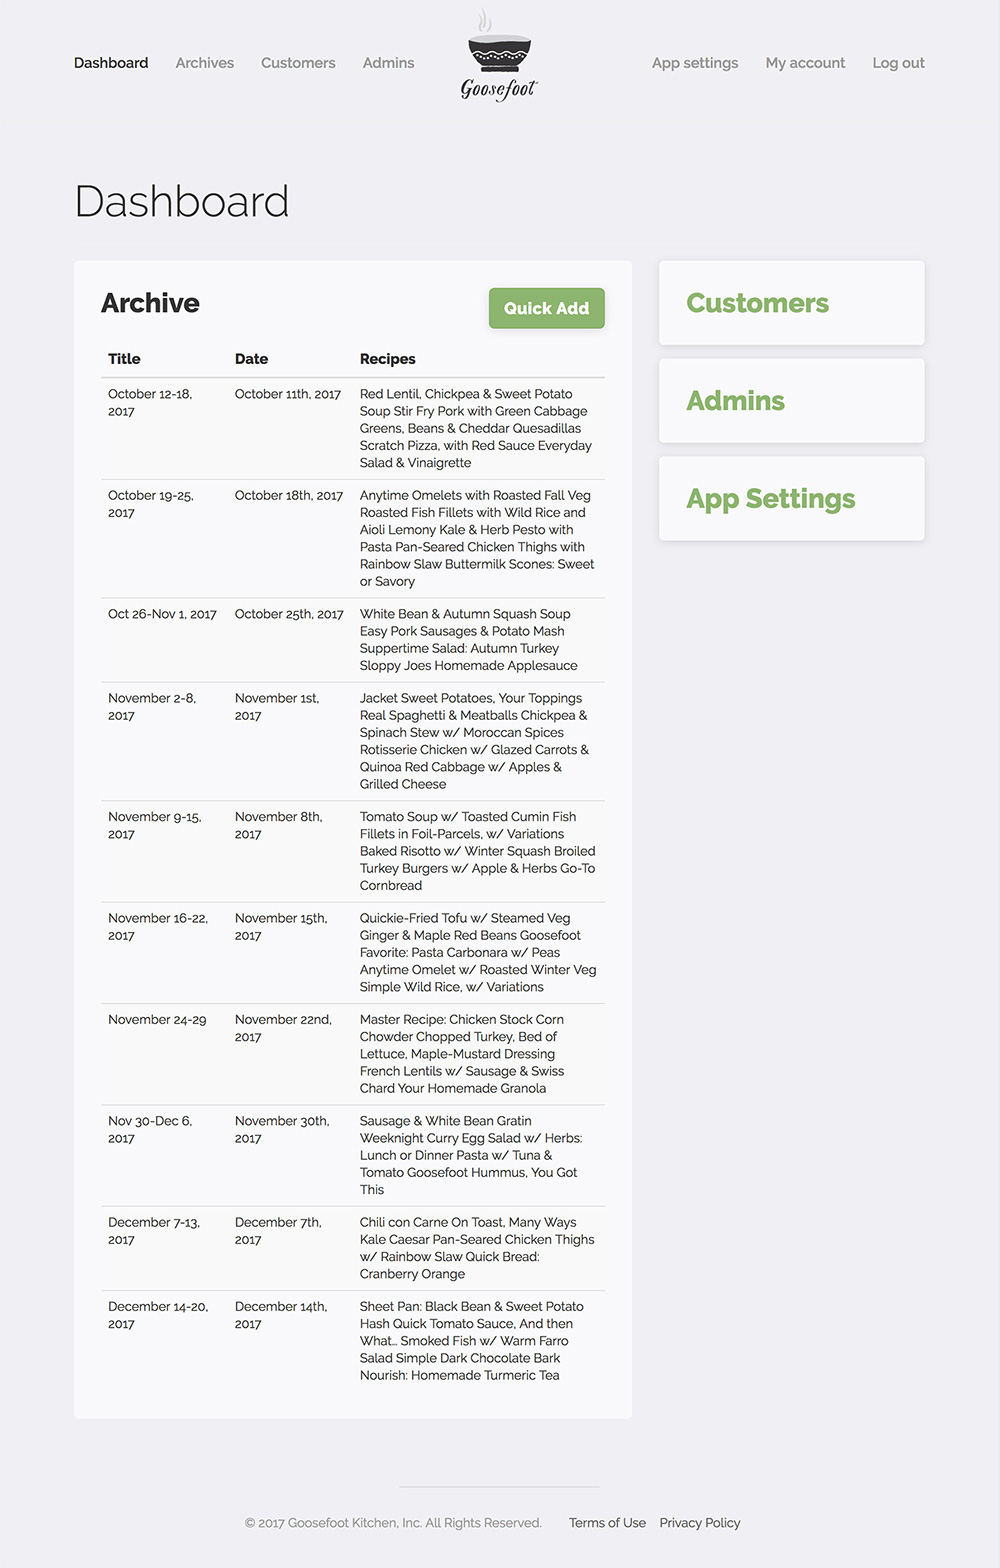 Screenshot of Goosefoot Kitchen admin interface